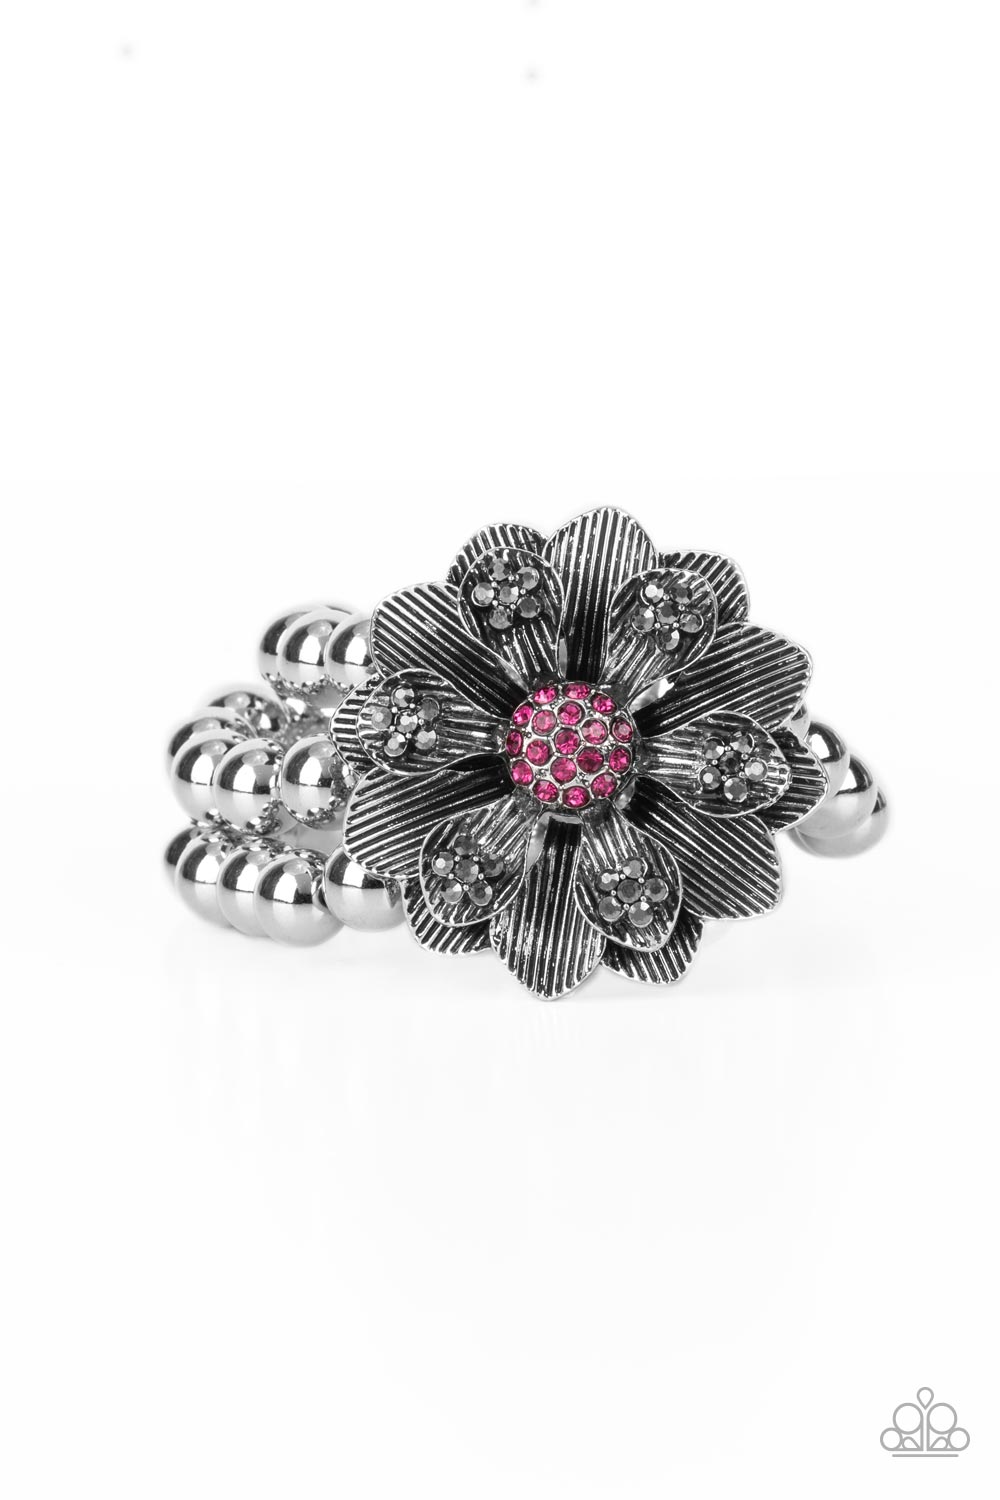 Botanical Bravado Pink & Silver Flower Bracelet - Paparazzi Accessories- lightbox - CarasShop.com - $5 Jewelry by Cara Jewels